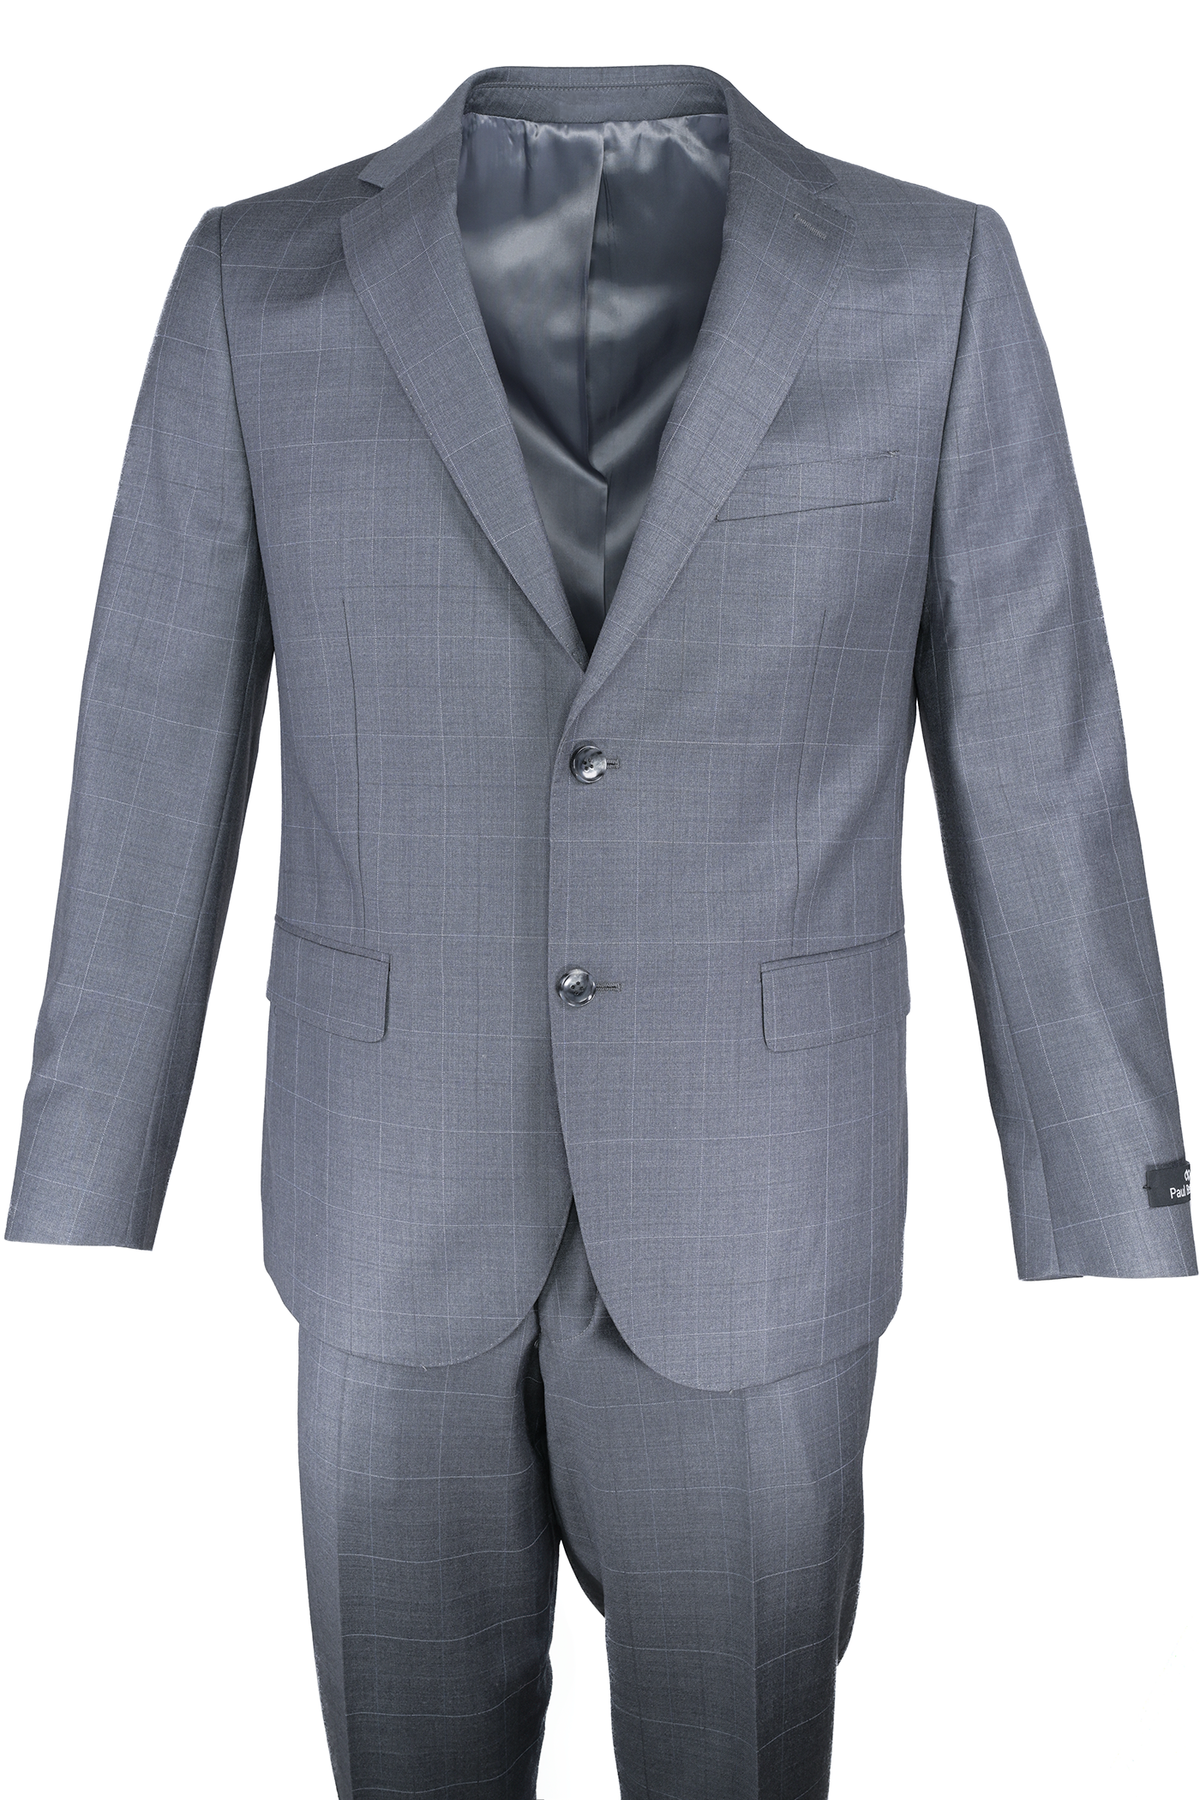 Paul Betenly Windowpane Suit Grey